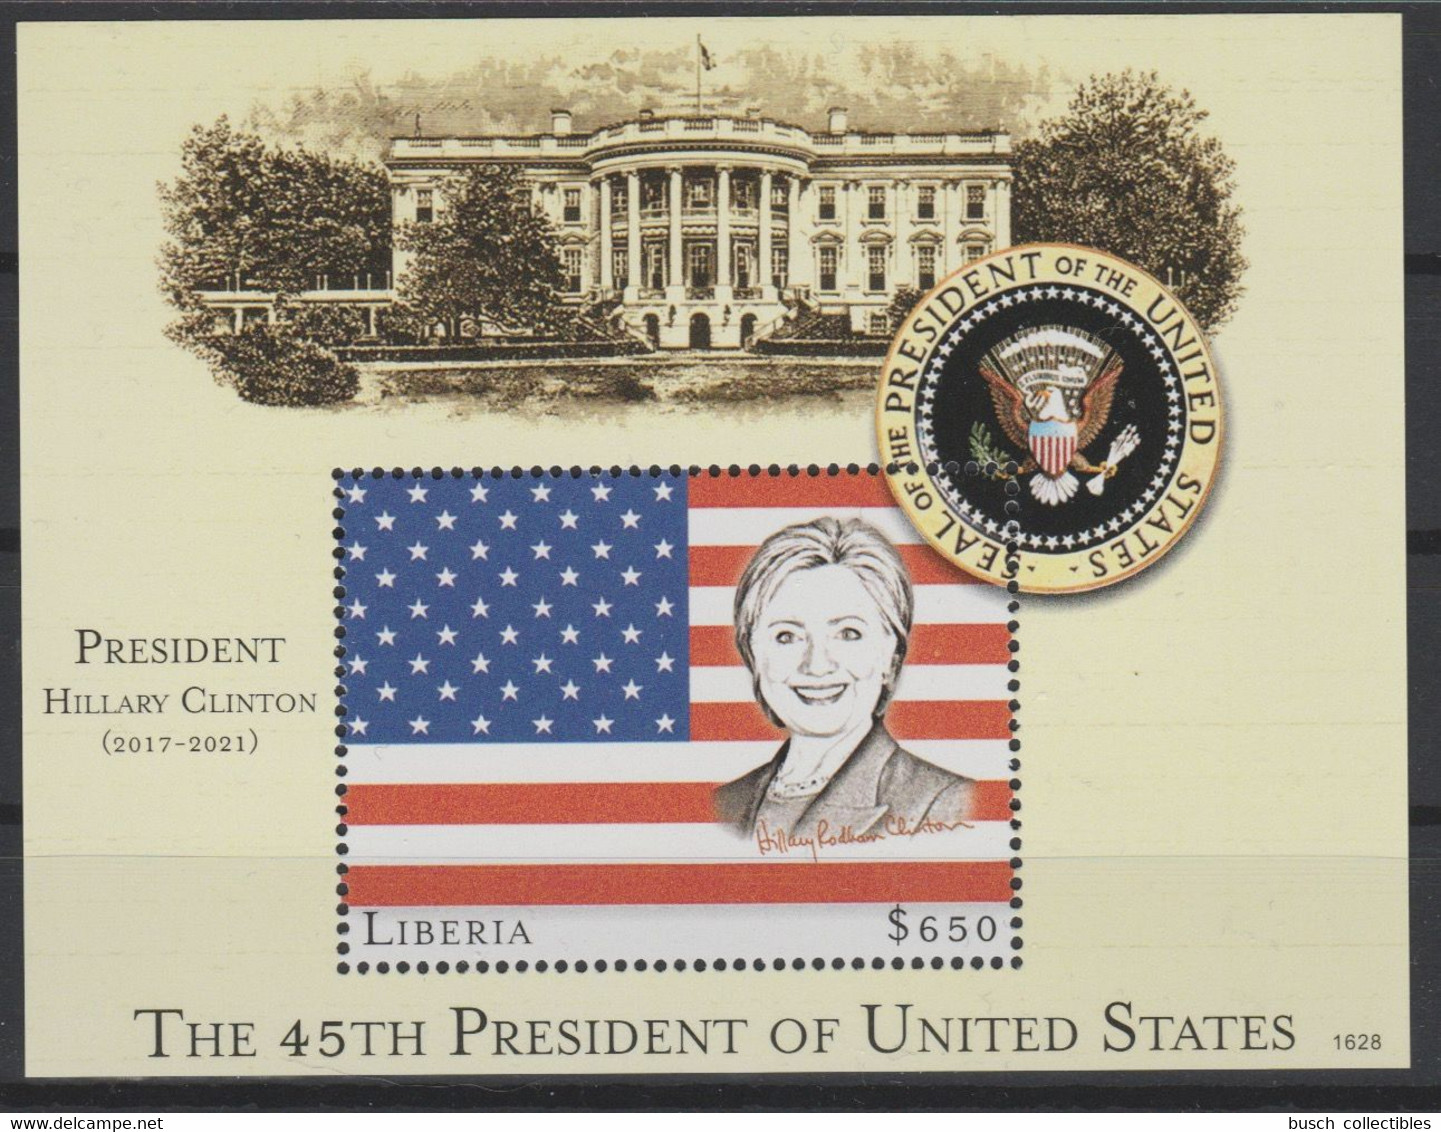 Liberia 2016 Mi. Bl. 754 UNISSUED NON EMIS Hillary Clinton 45th President United States White House Flag Stars Stripes - Timbres